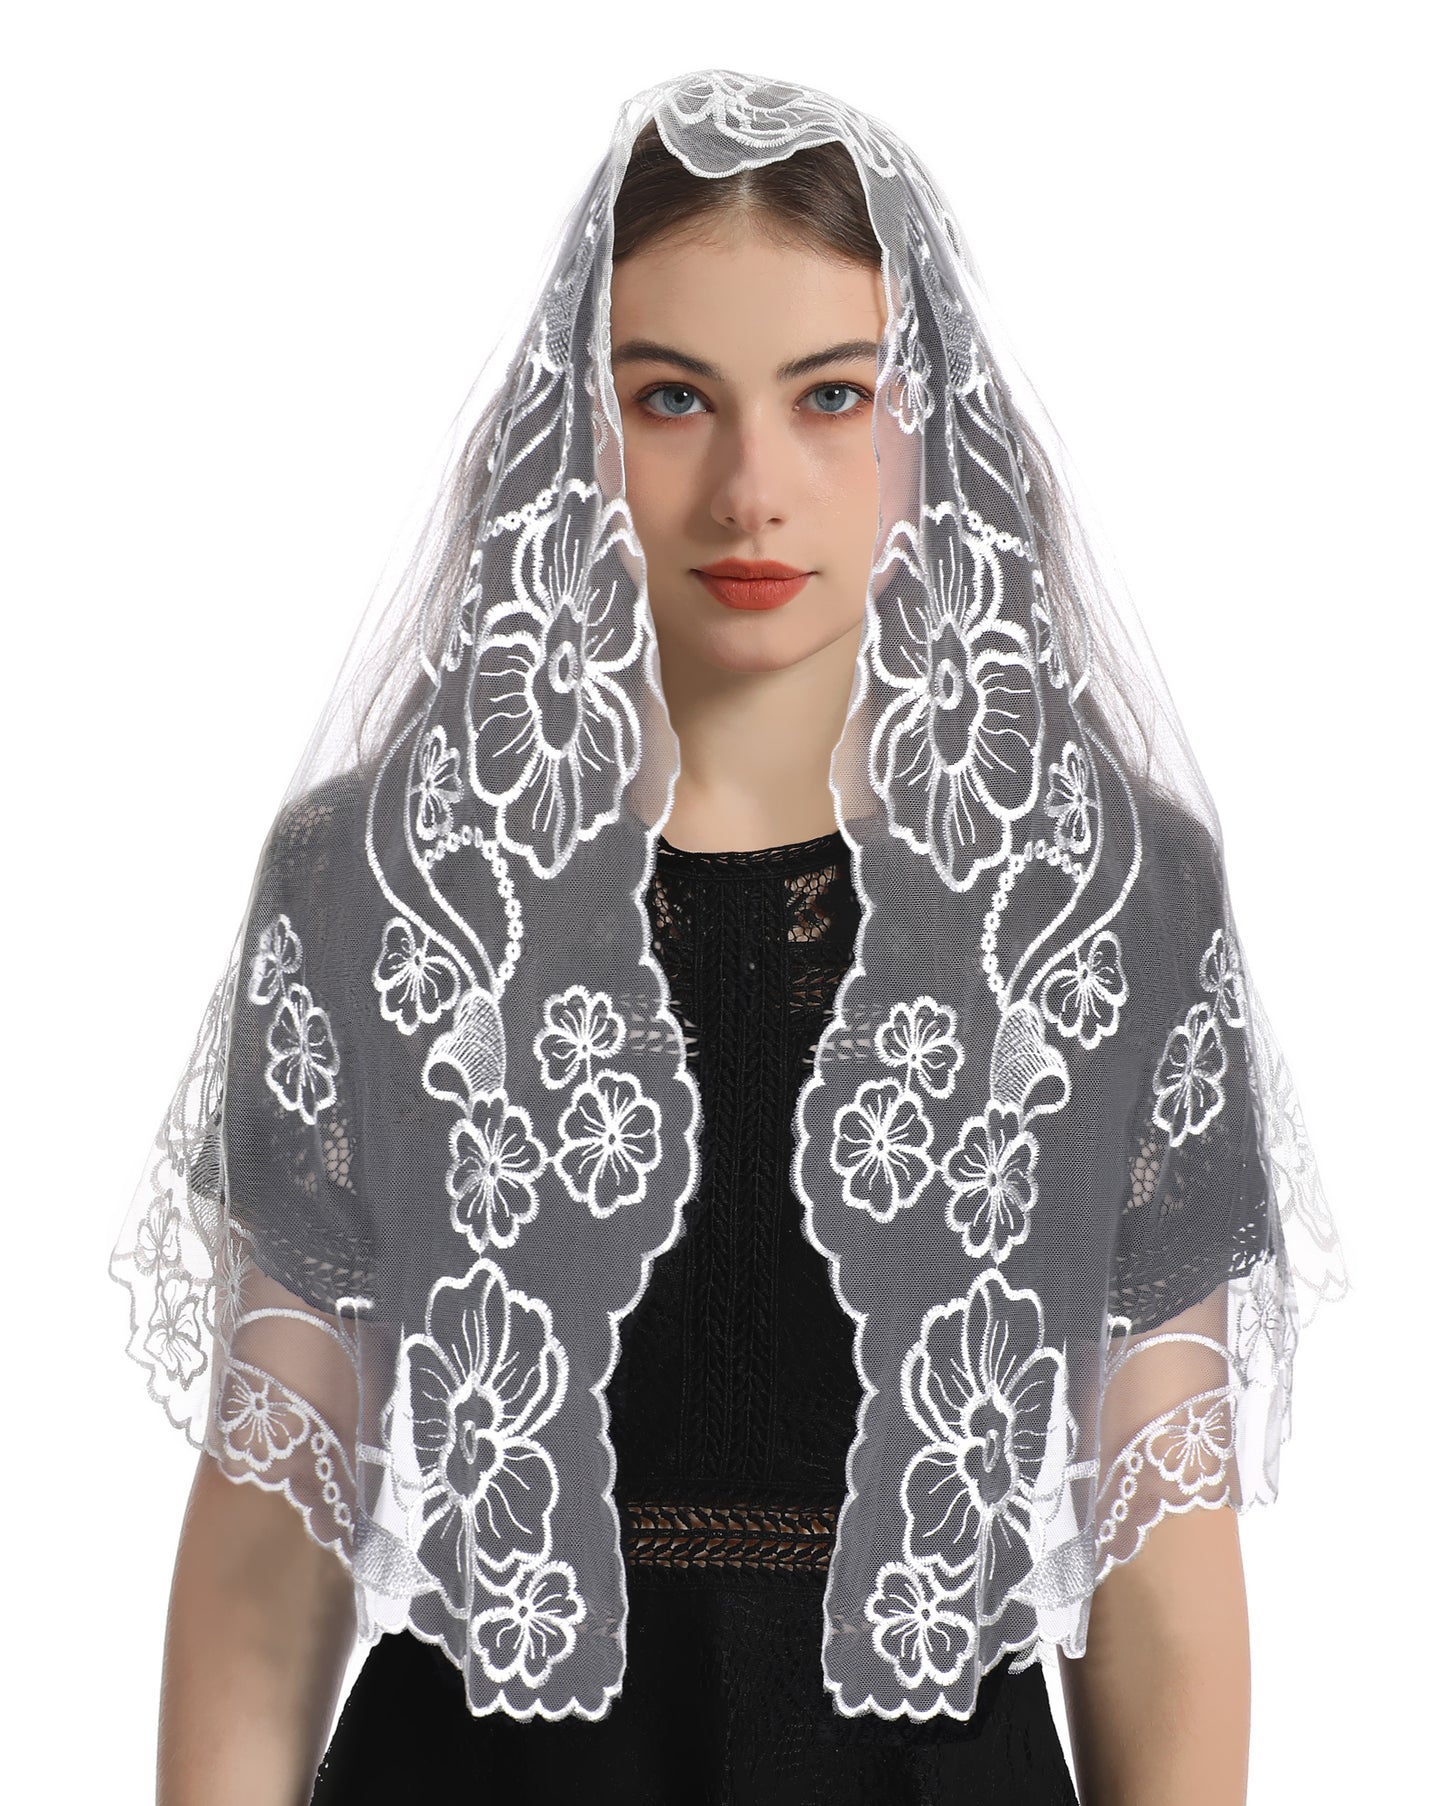 Bozidol D-shape Mantilla Church Veil - Women's Vintage Veil with Madonna and Child Embroidery